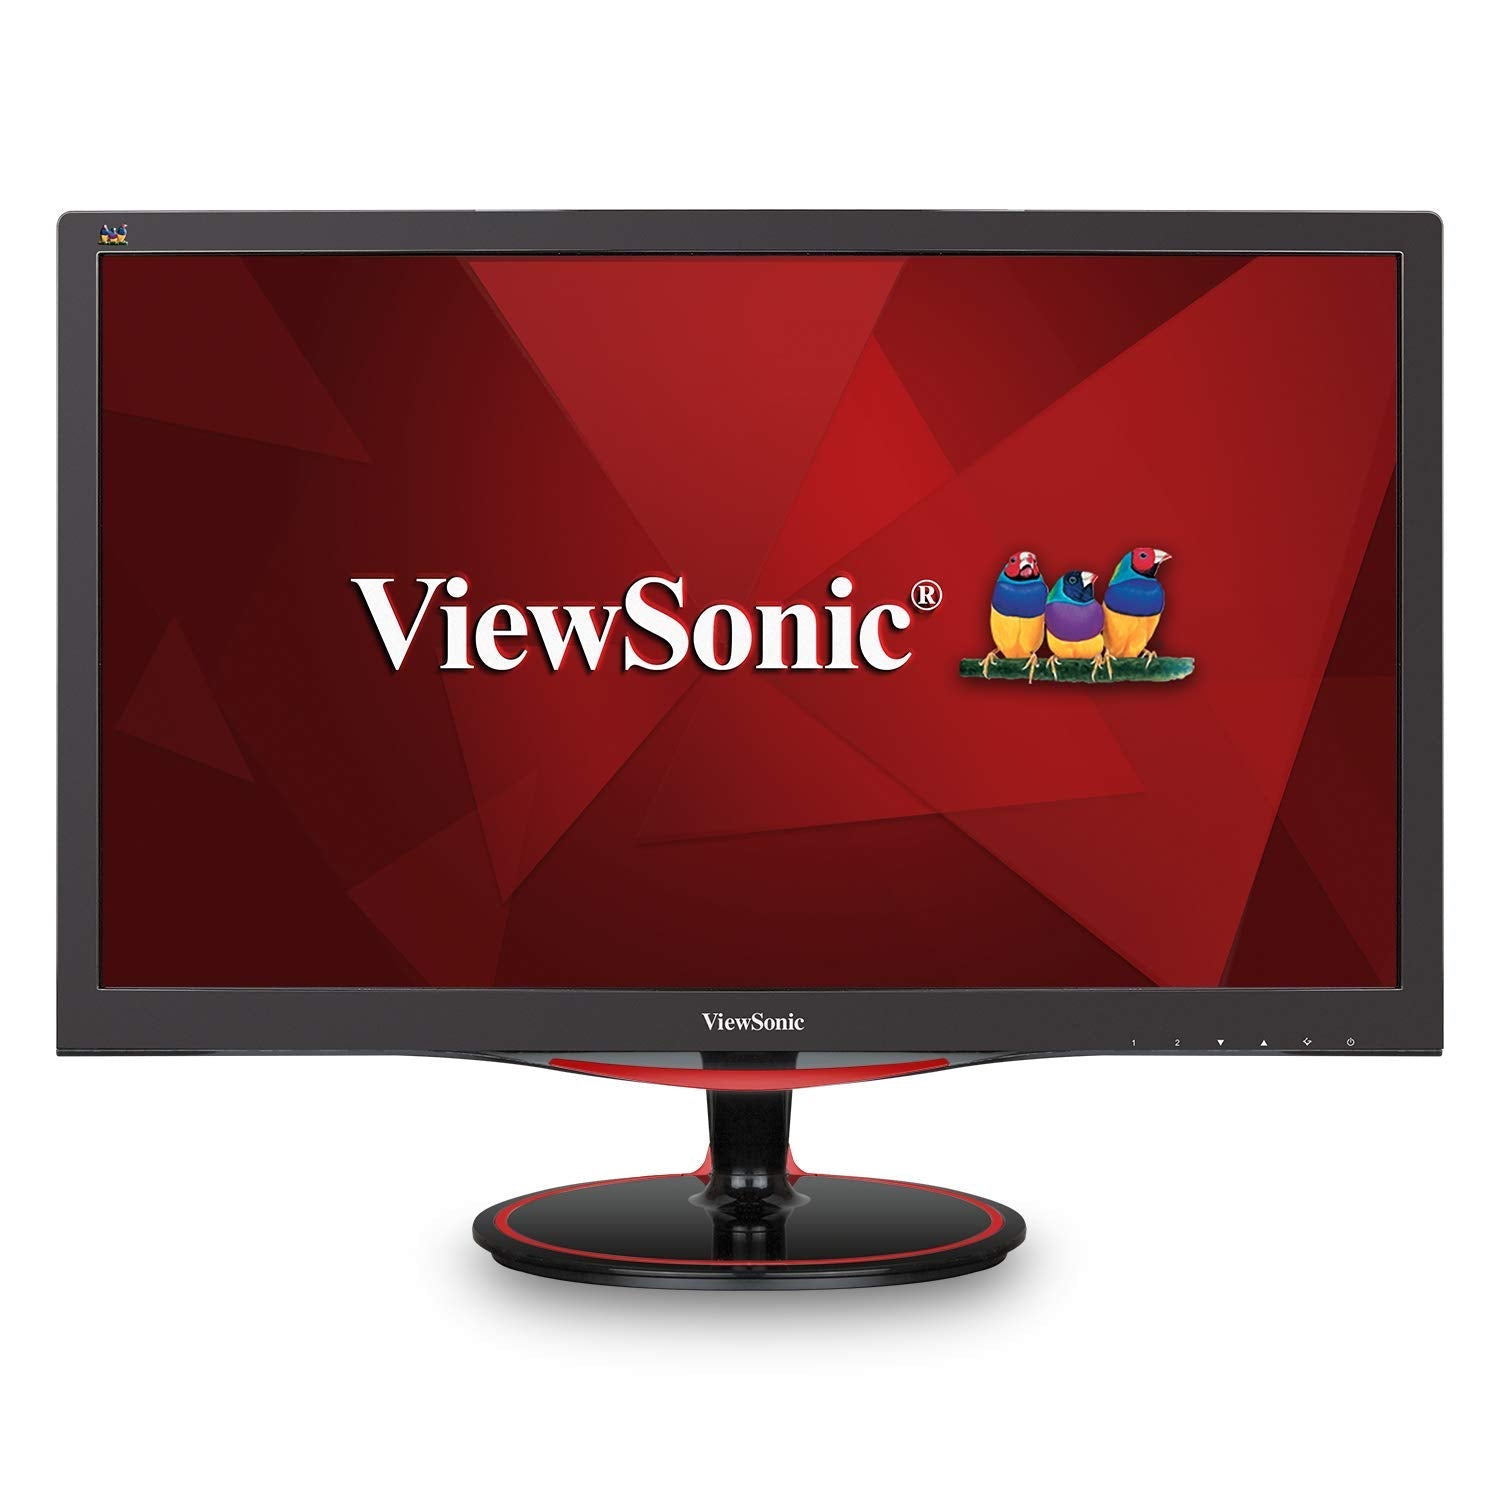 ViewSonic VX2458-MHD-R 23.6" 16:9 144 Hz FreeSync LCD Monitor CGrade Refurbished